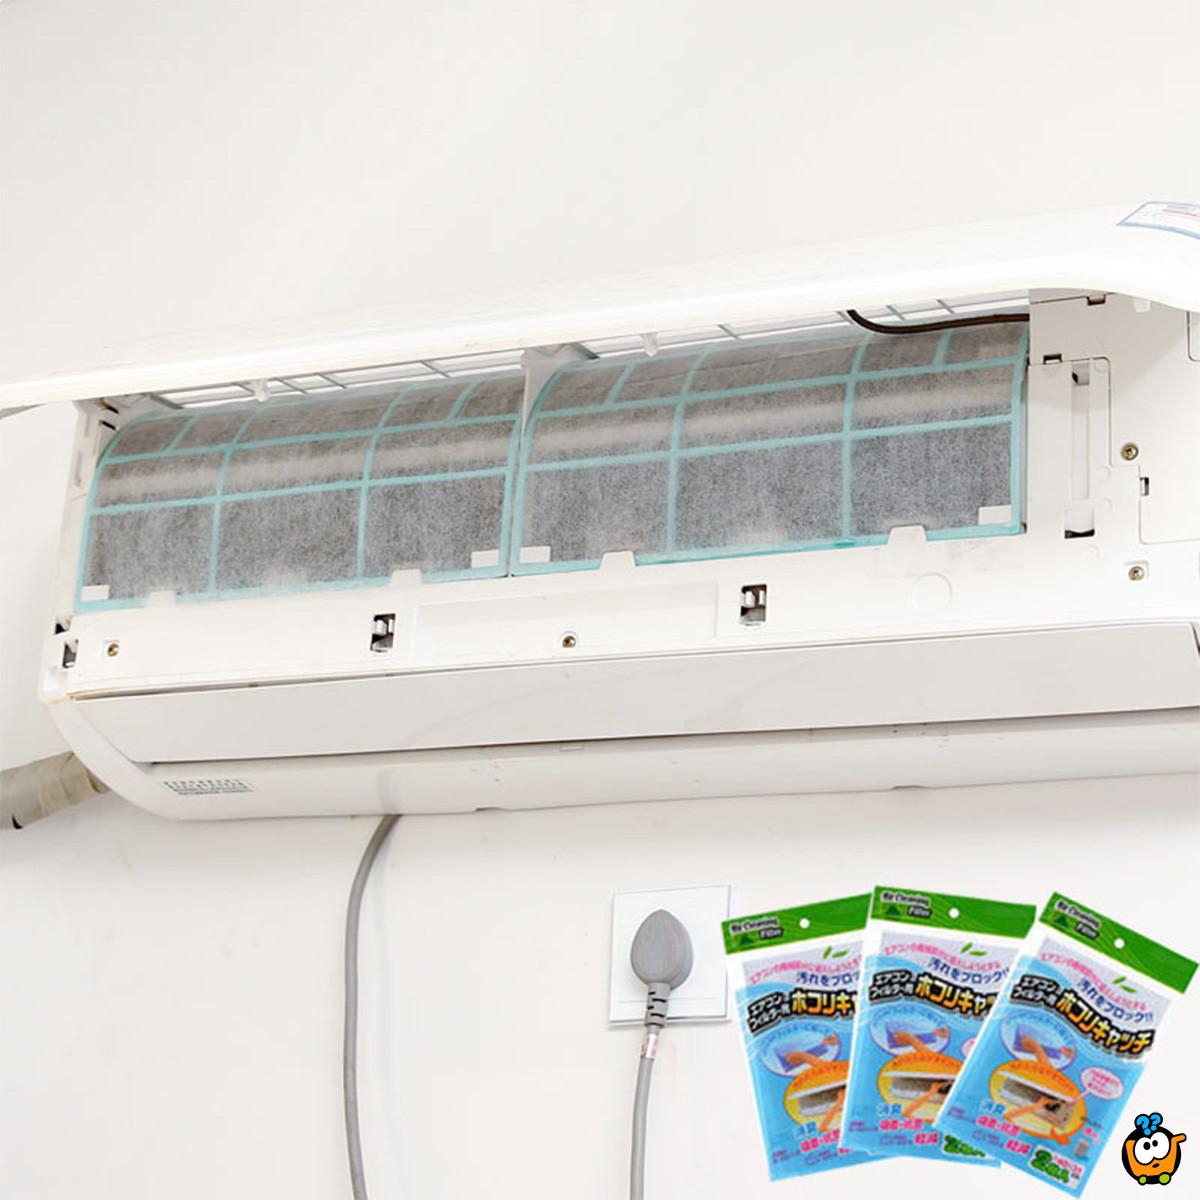 Filter prečišćivač za klimu - za zdrav vazduh u domu